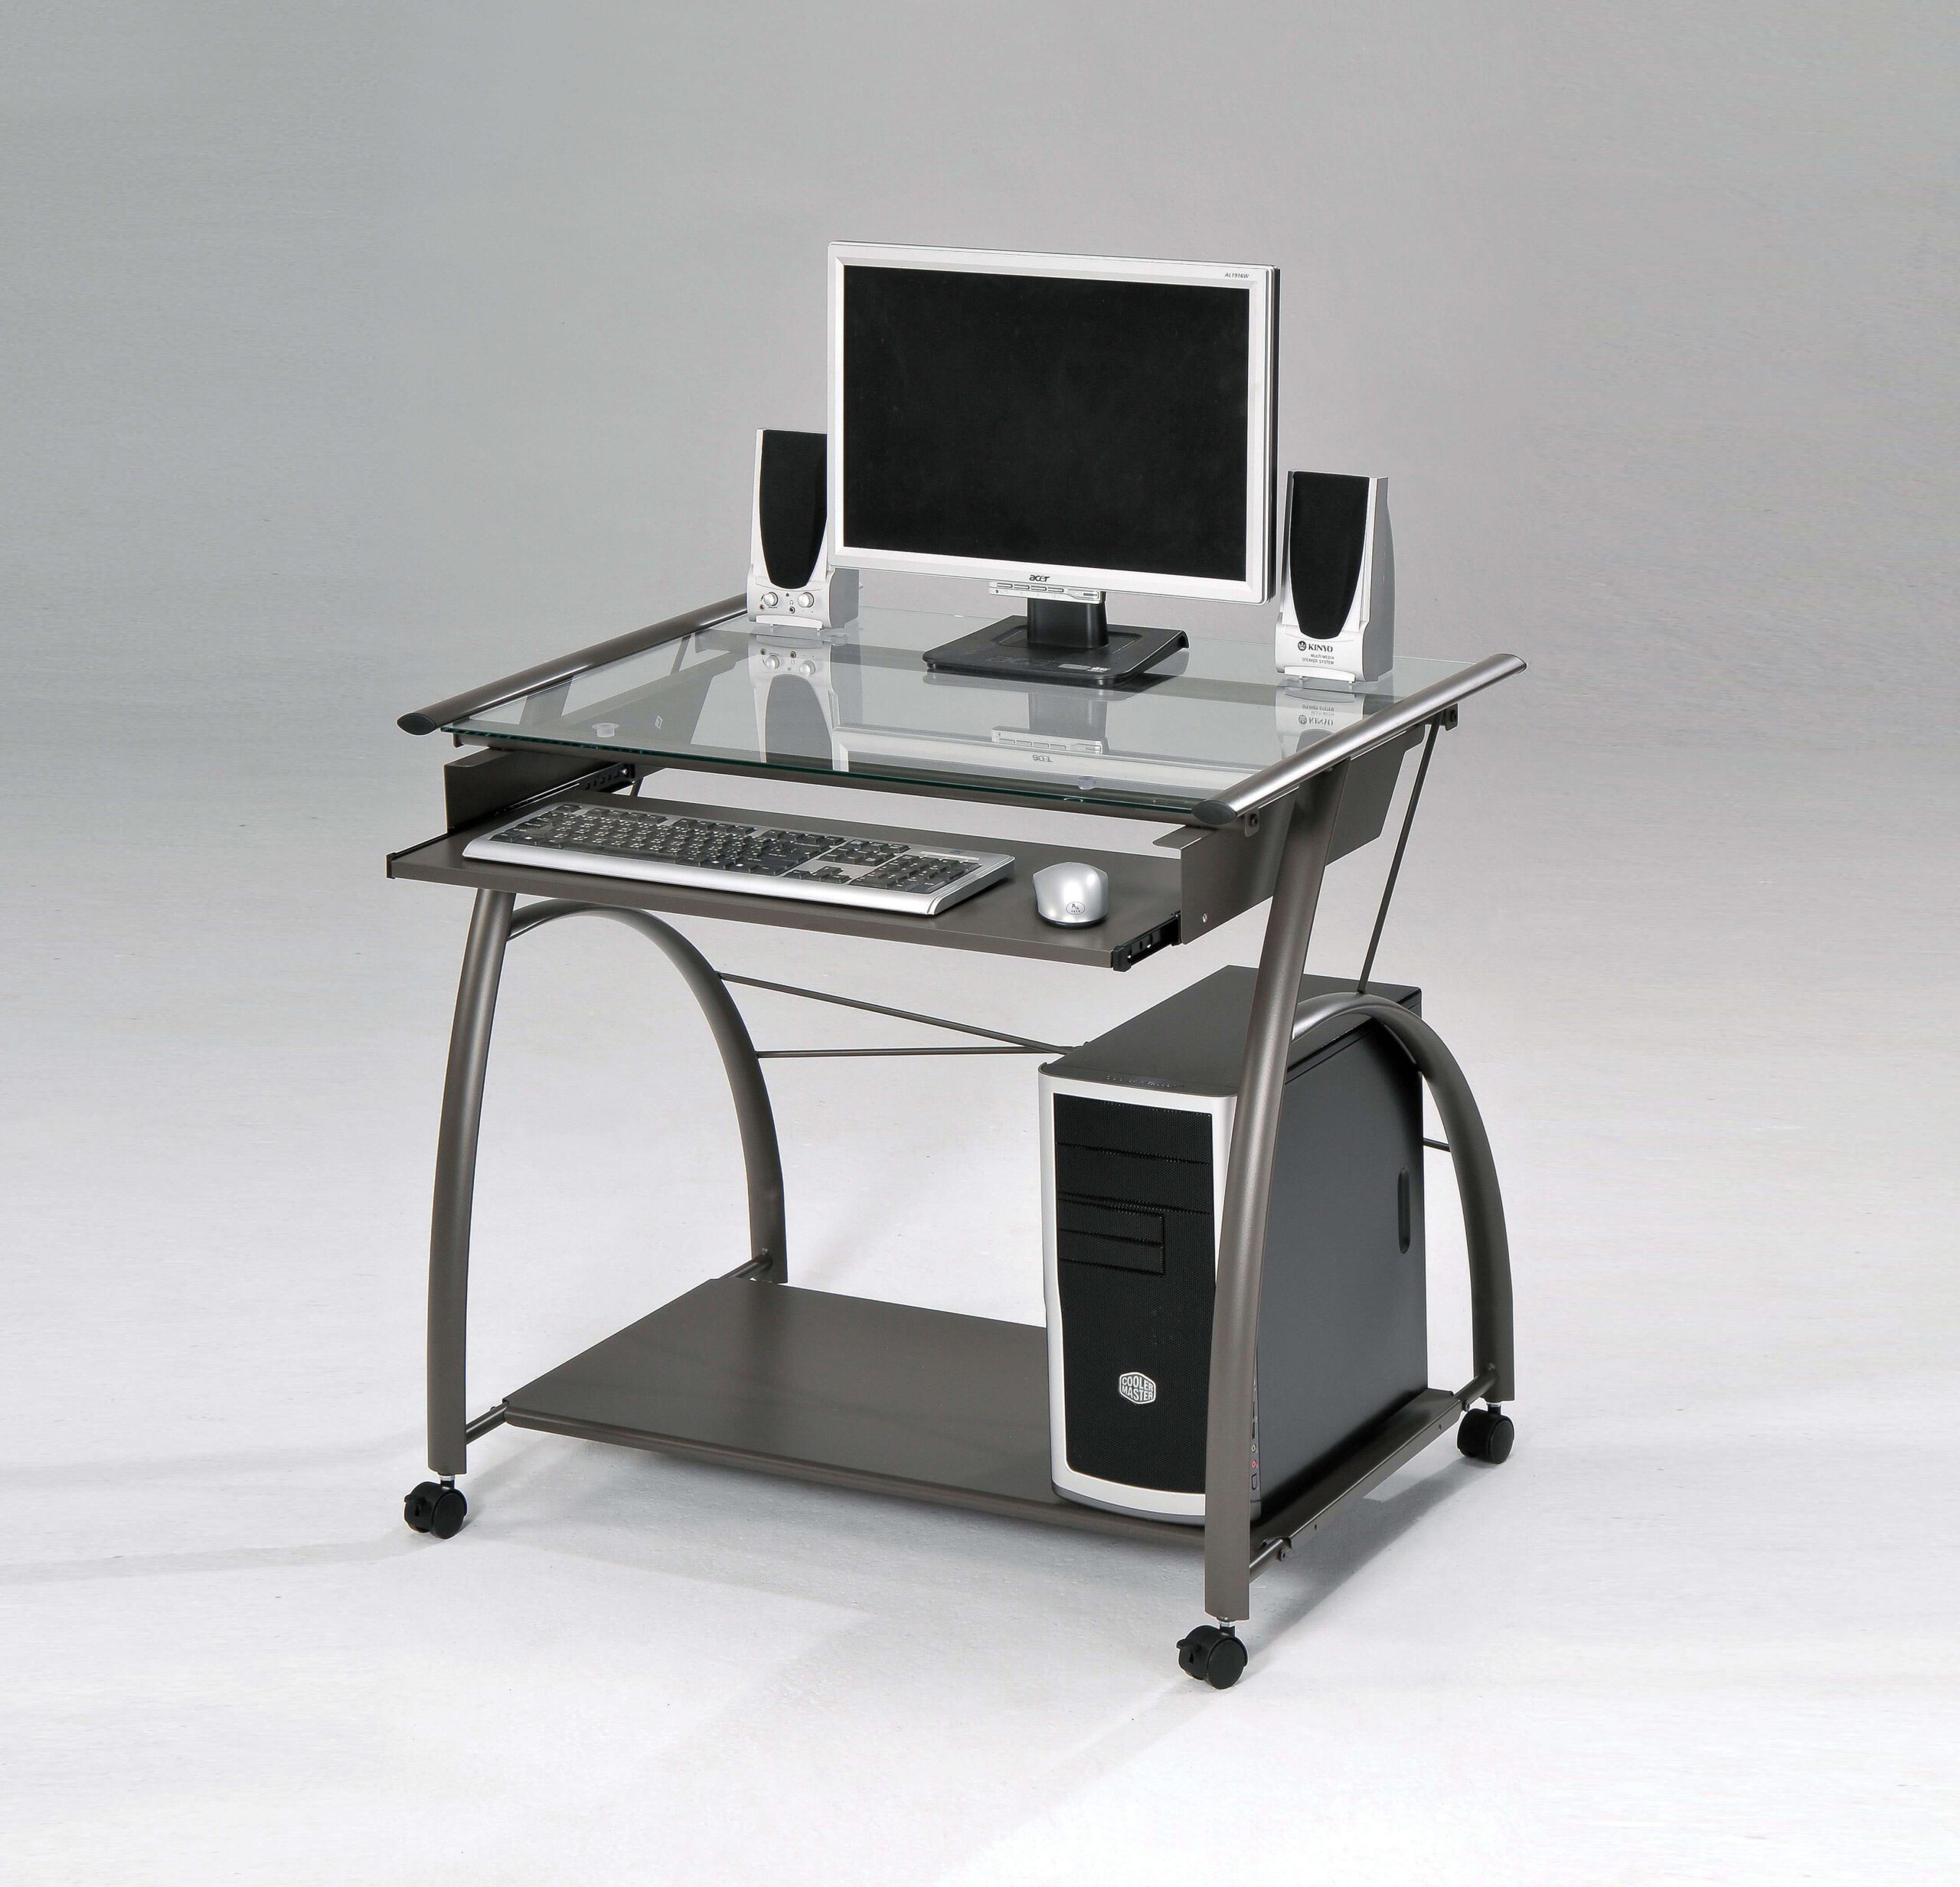 Vincent computer desk by Acme product image